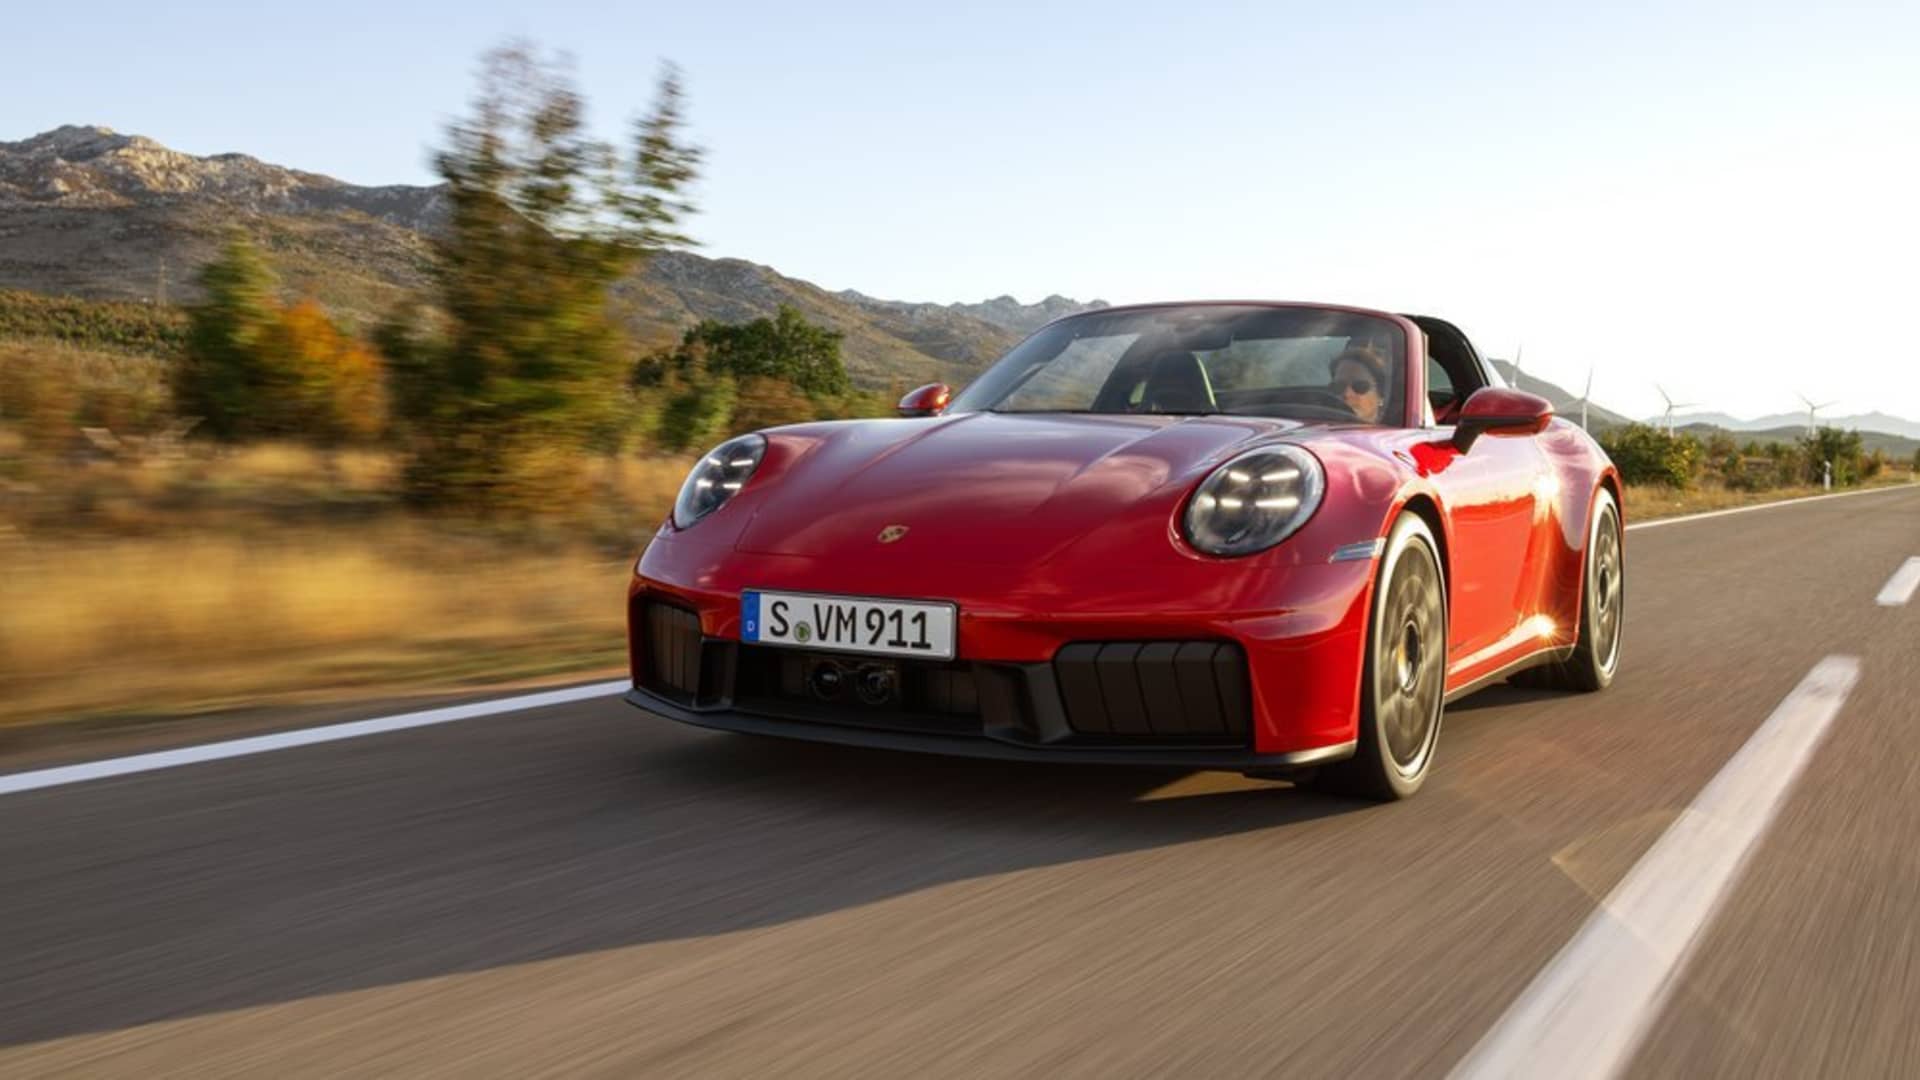 Porsche reveals firstever 911 hybrid sports car, starting at 164,900